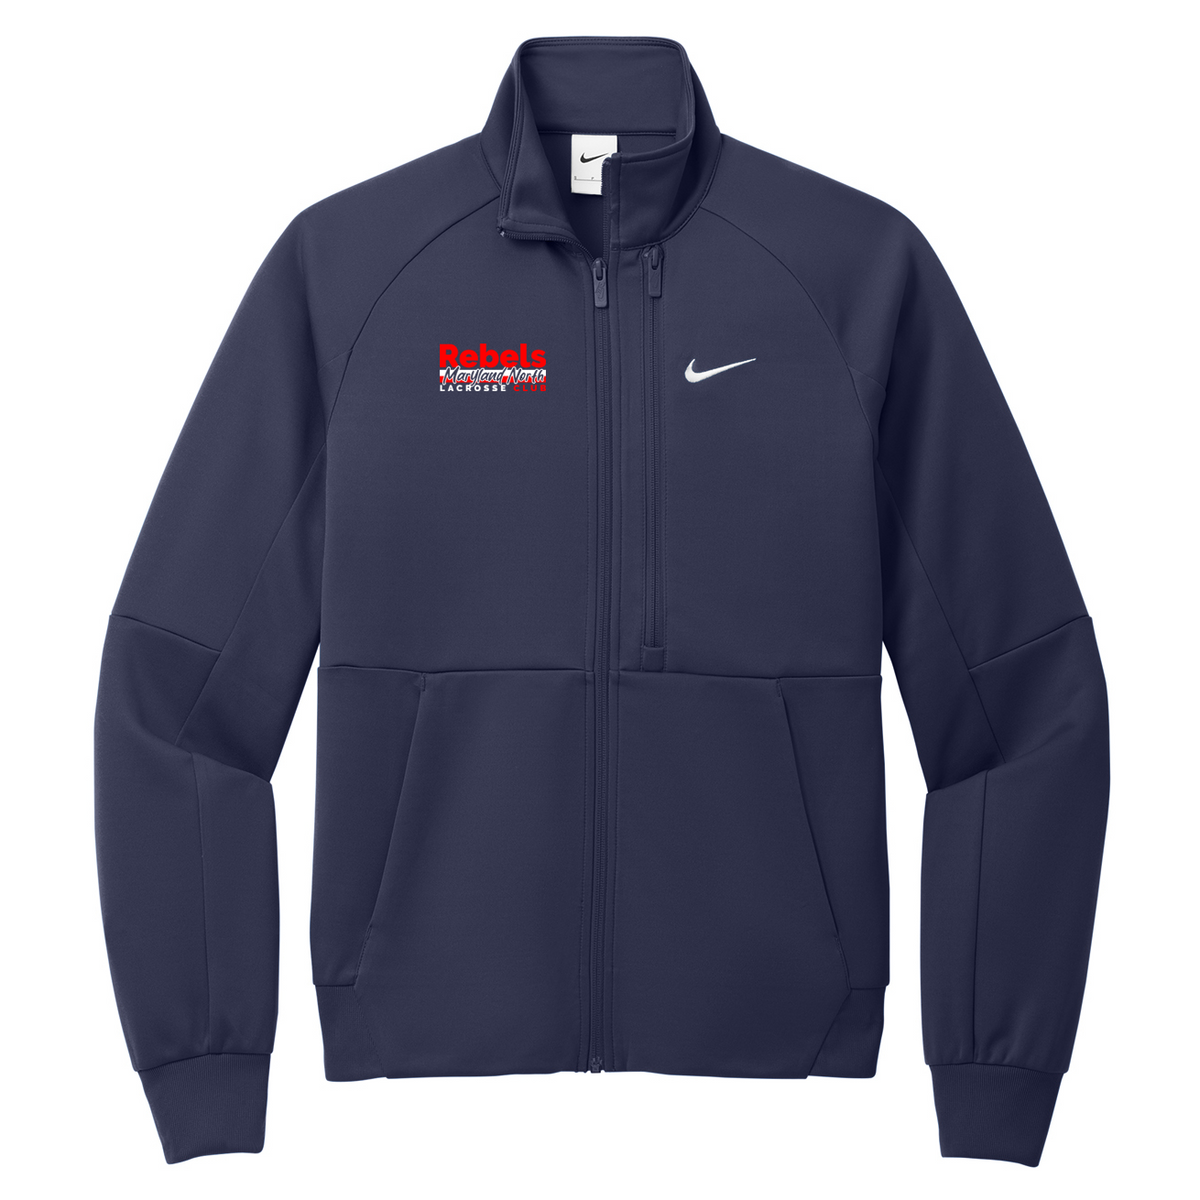 Rebels MD North Nike Full-Zip Chest Swoosh Jacket